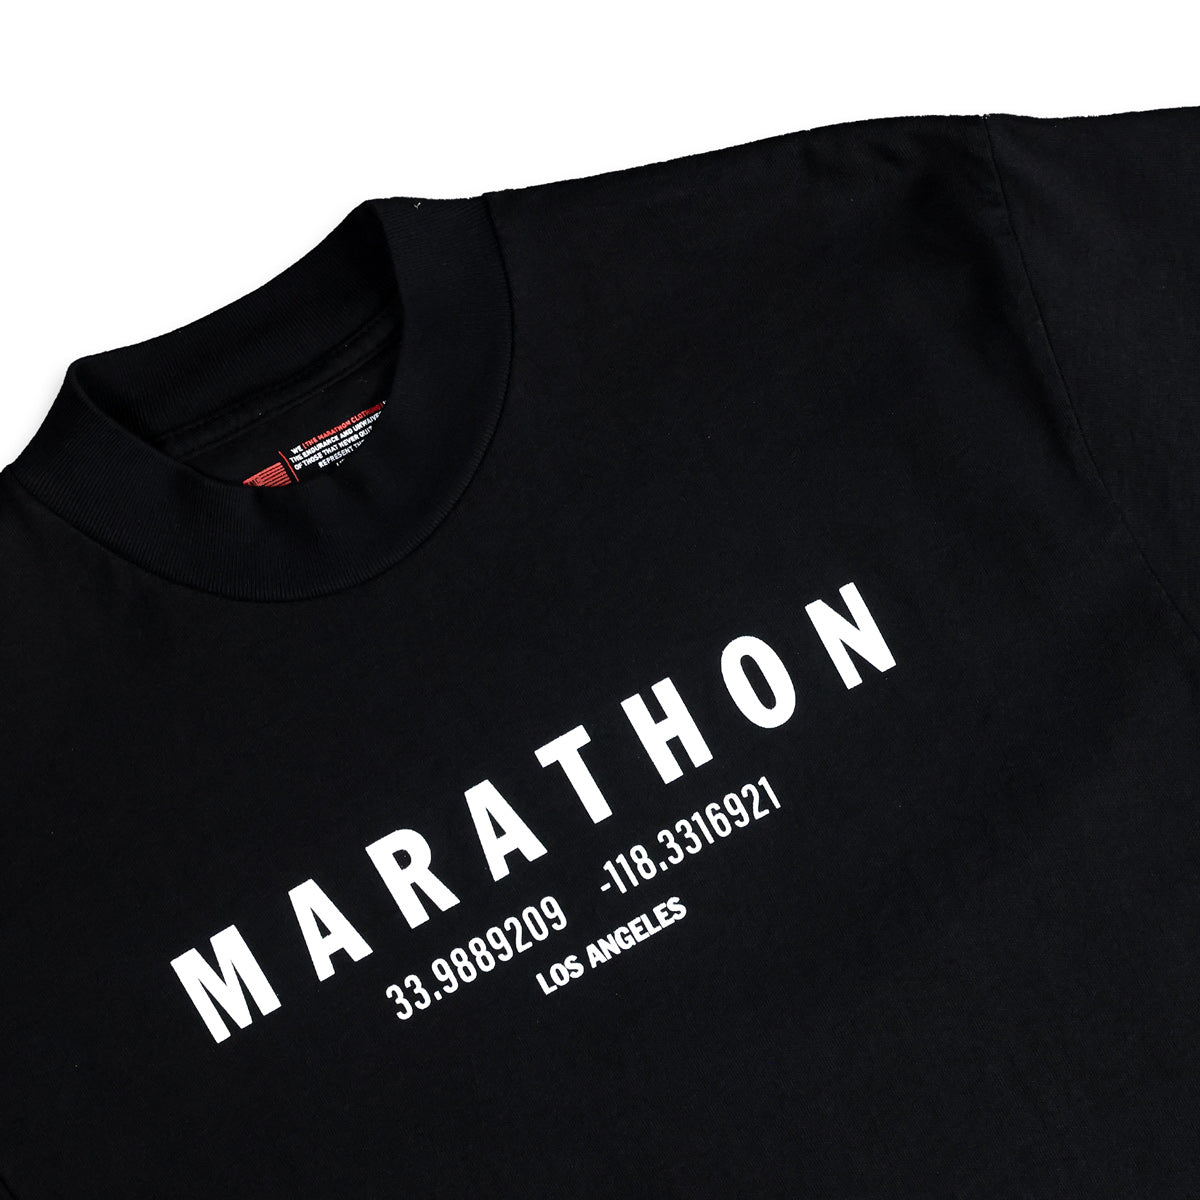 Marathon Foundation T-Shirt - Black/White - Detail 2